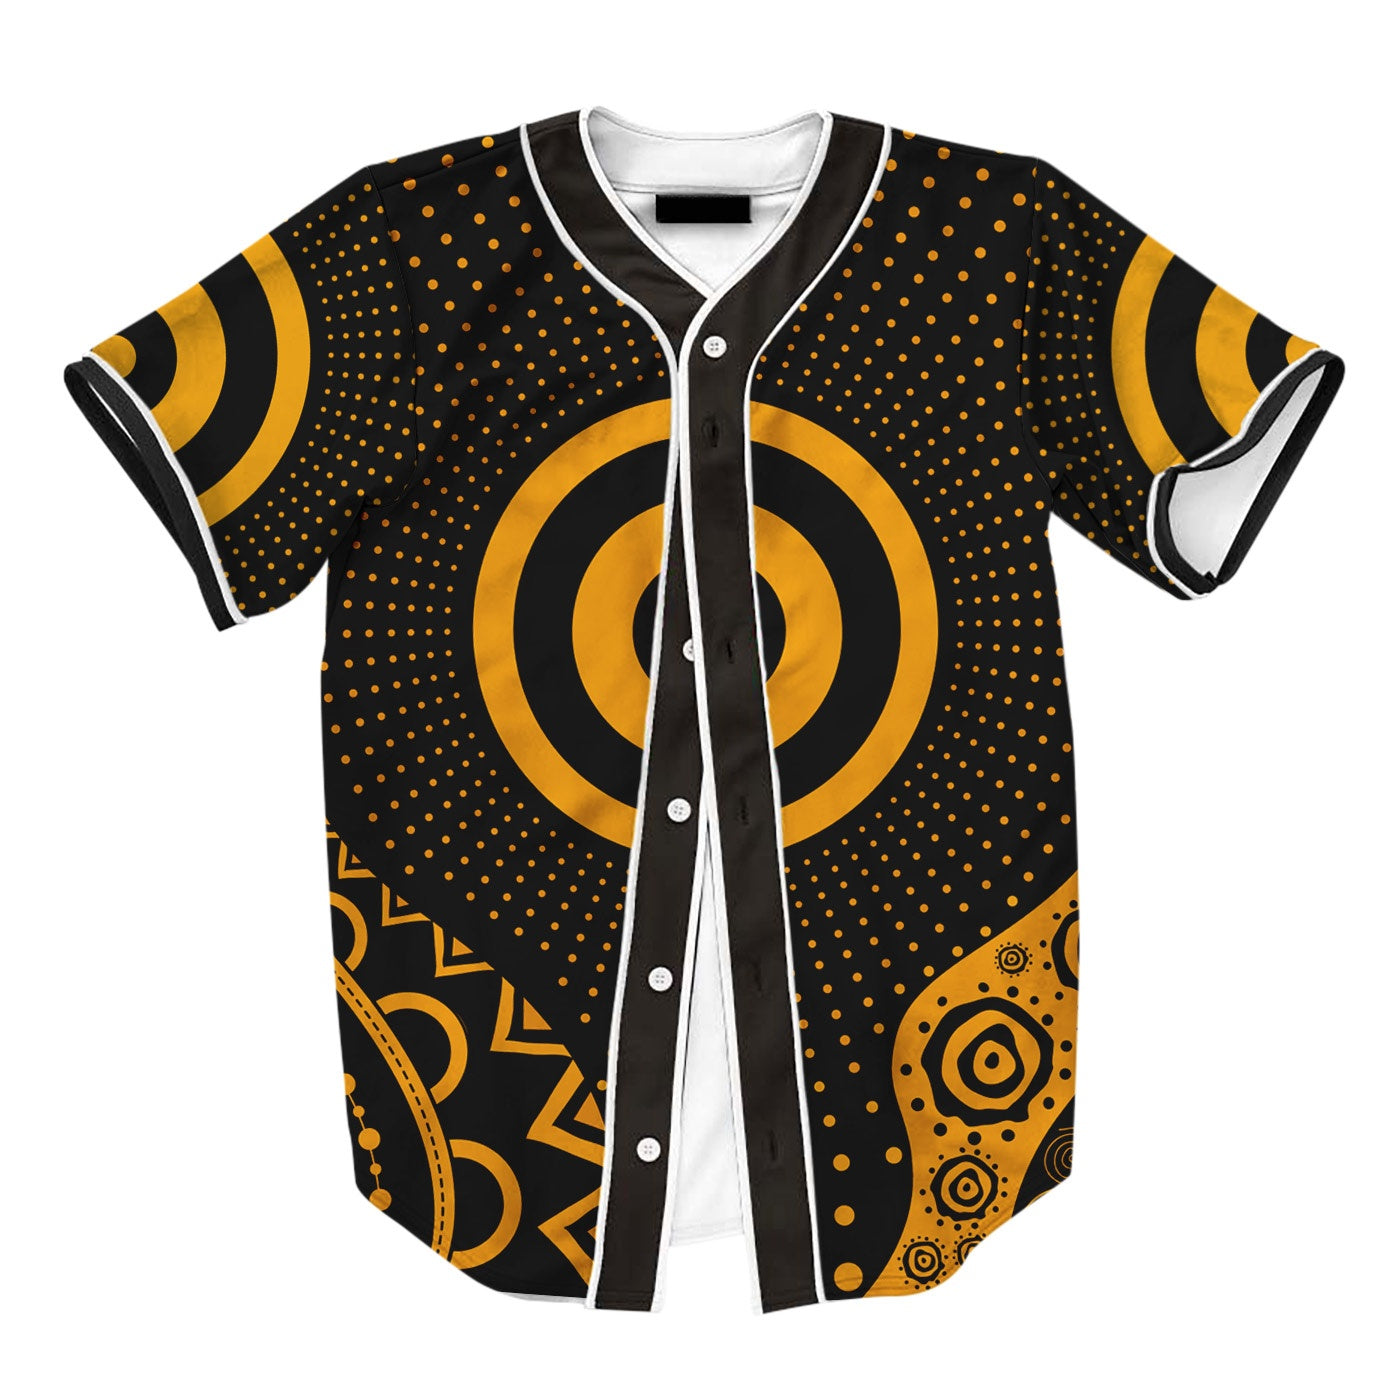 Source Women sleeveless baseball jersey yellow color 100% polyester full  custom design and logo baseball uniform sets for men and women on  m.